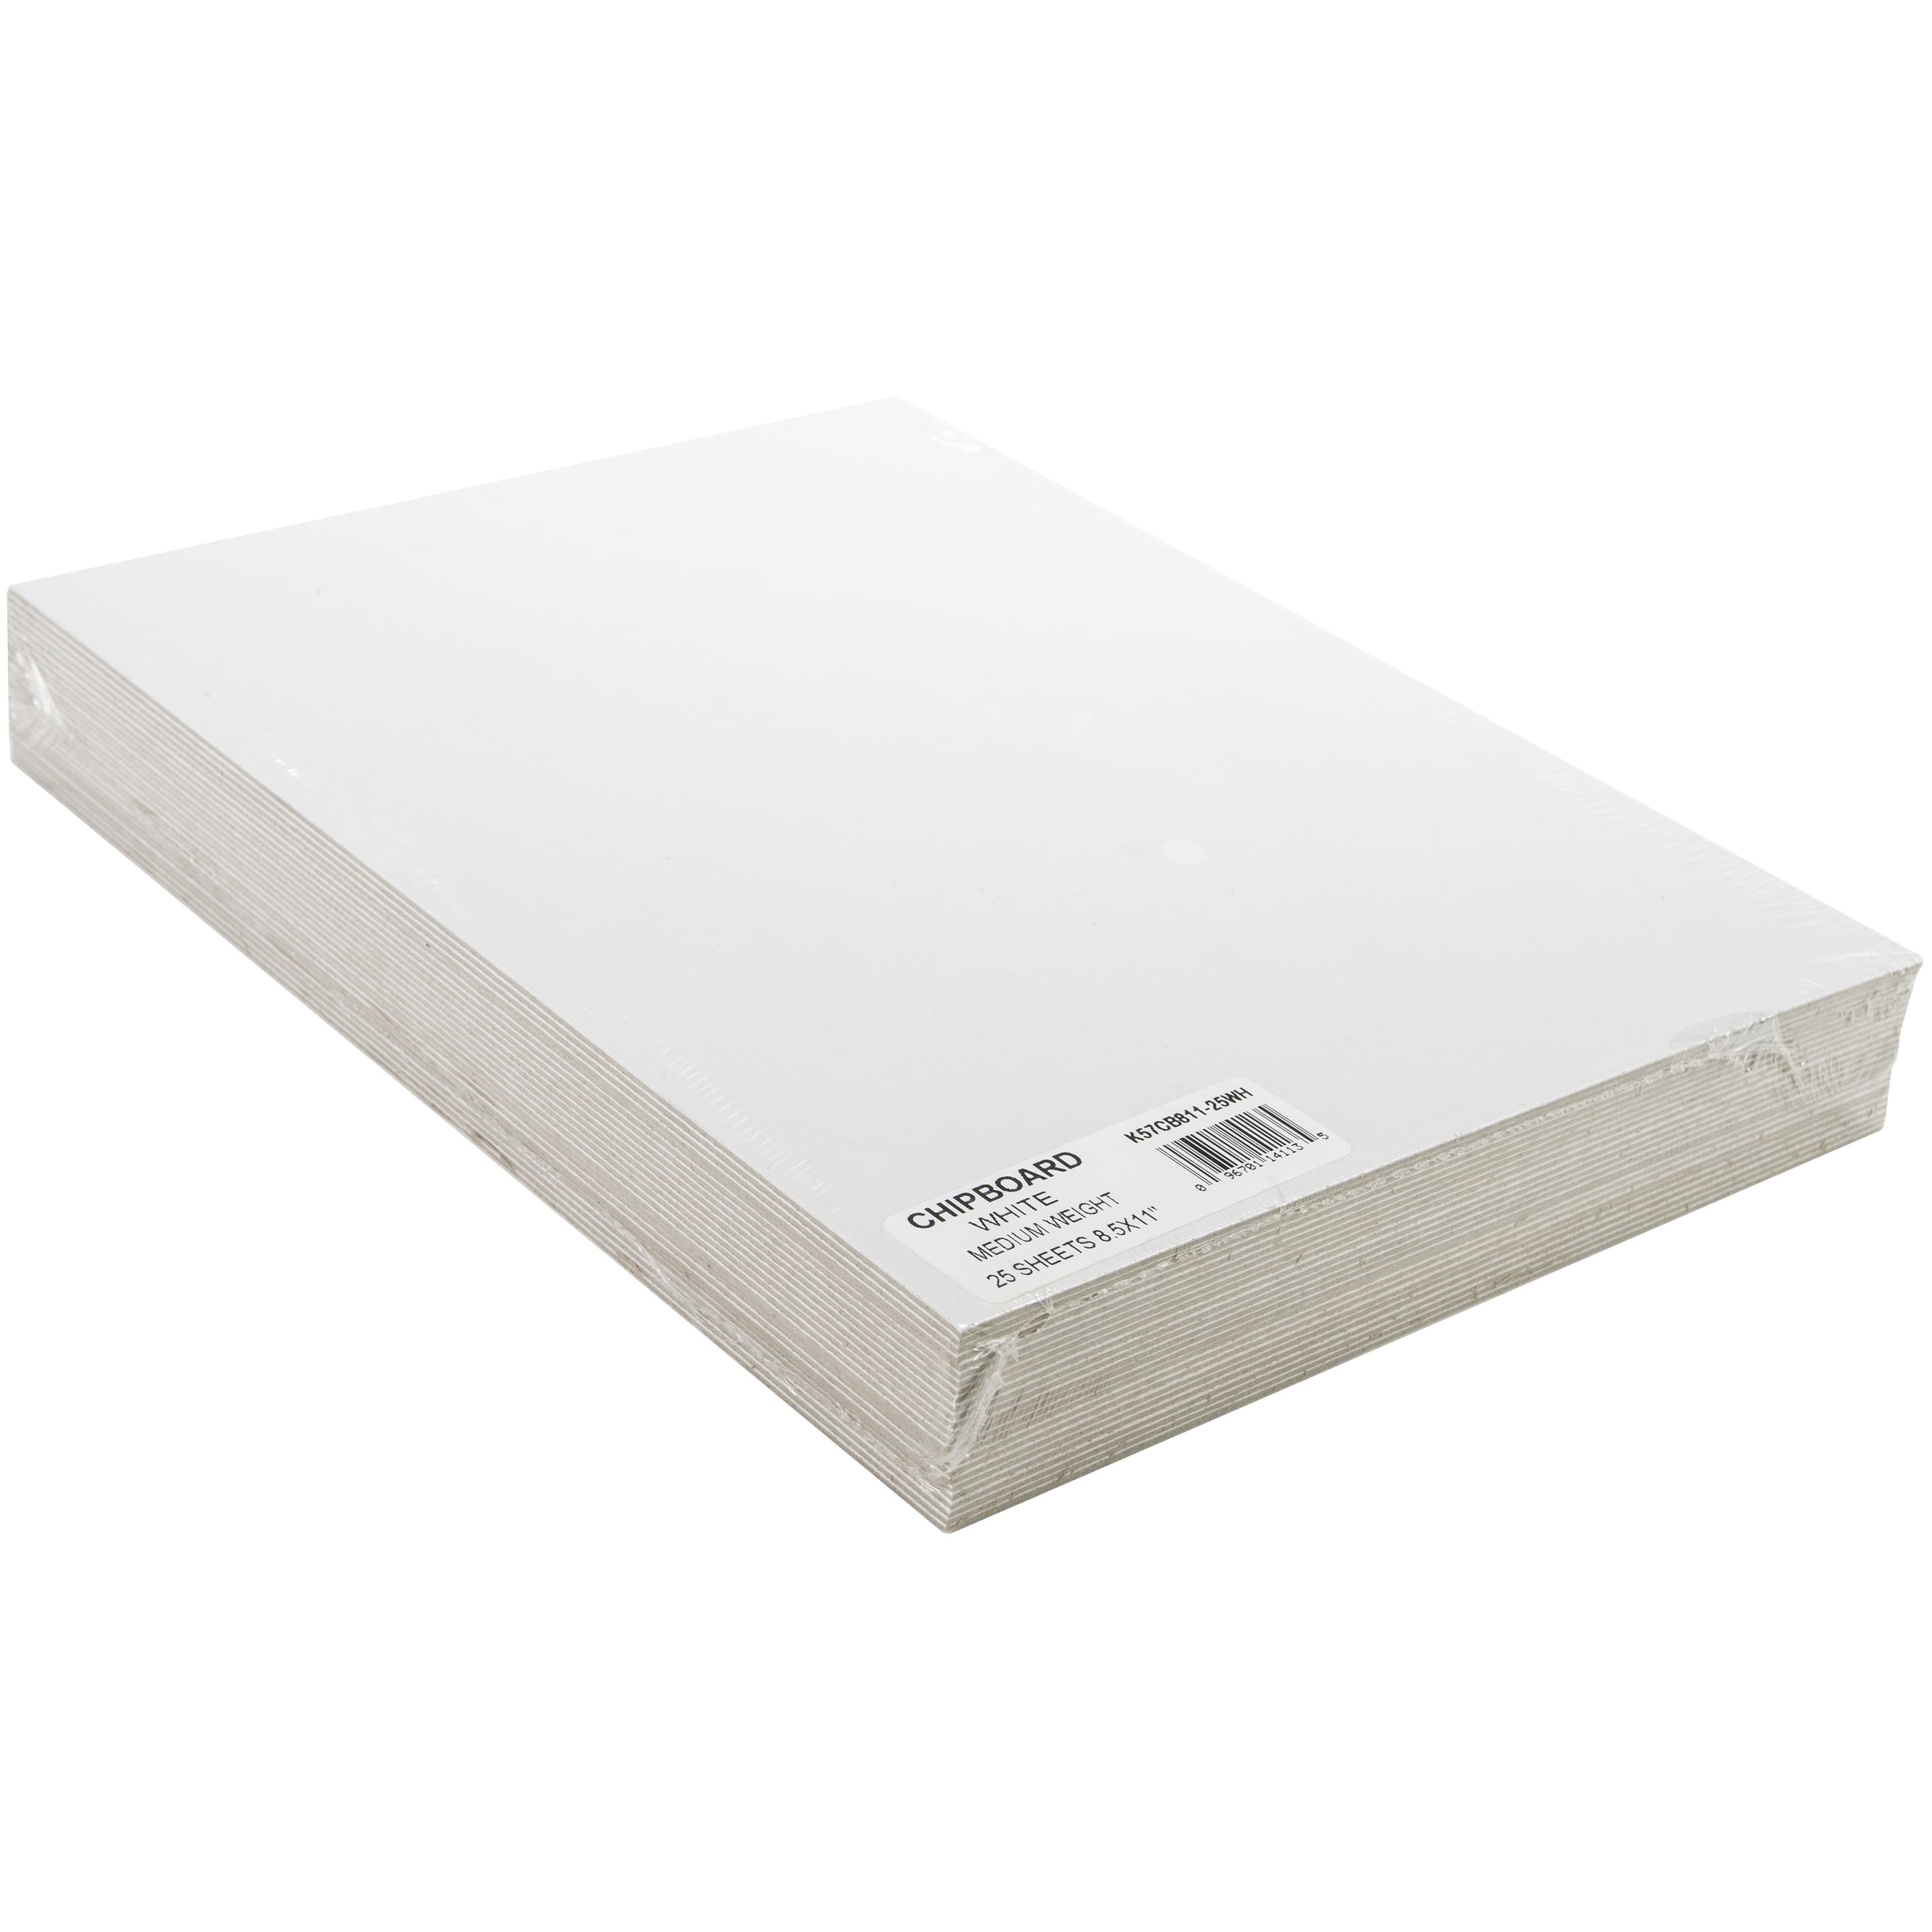 Medium Weight Chipboard Sheets 12 x12 Inch White 25 Per Pack PKG Sheet White NEW 